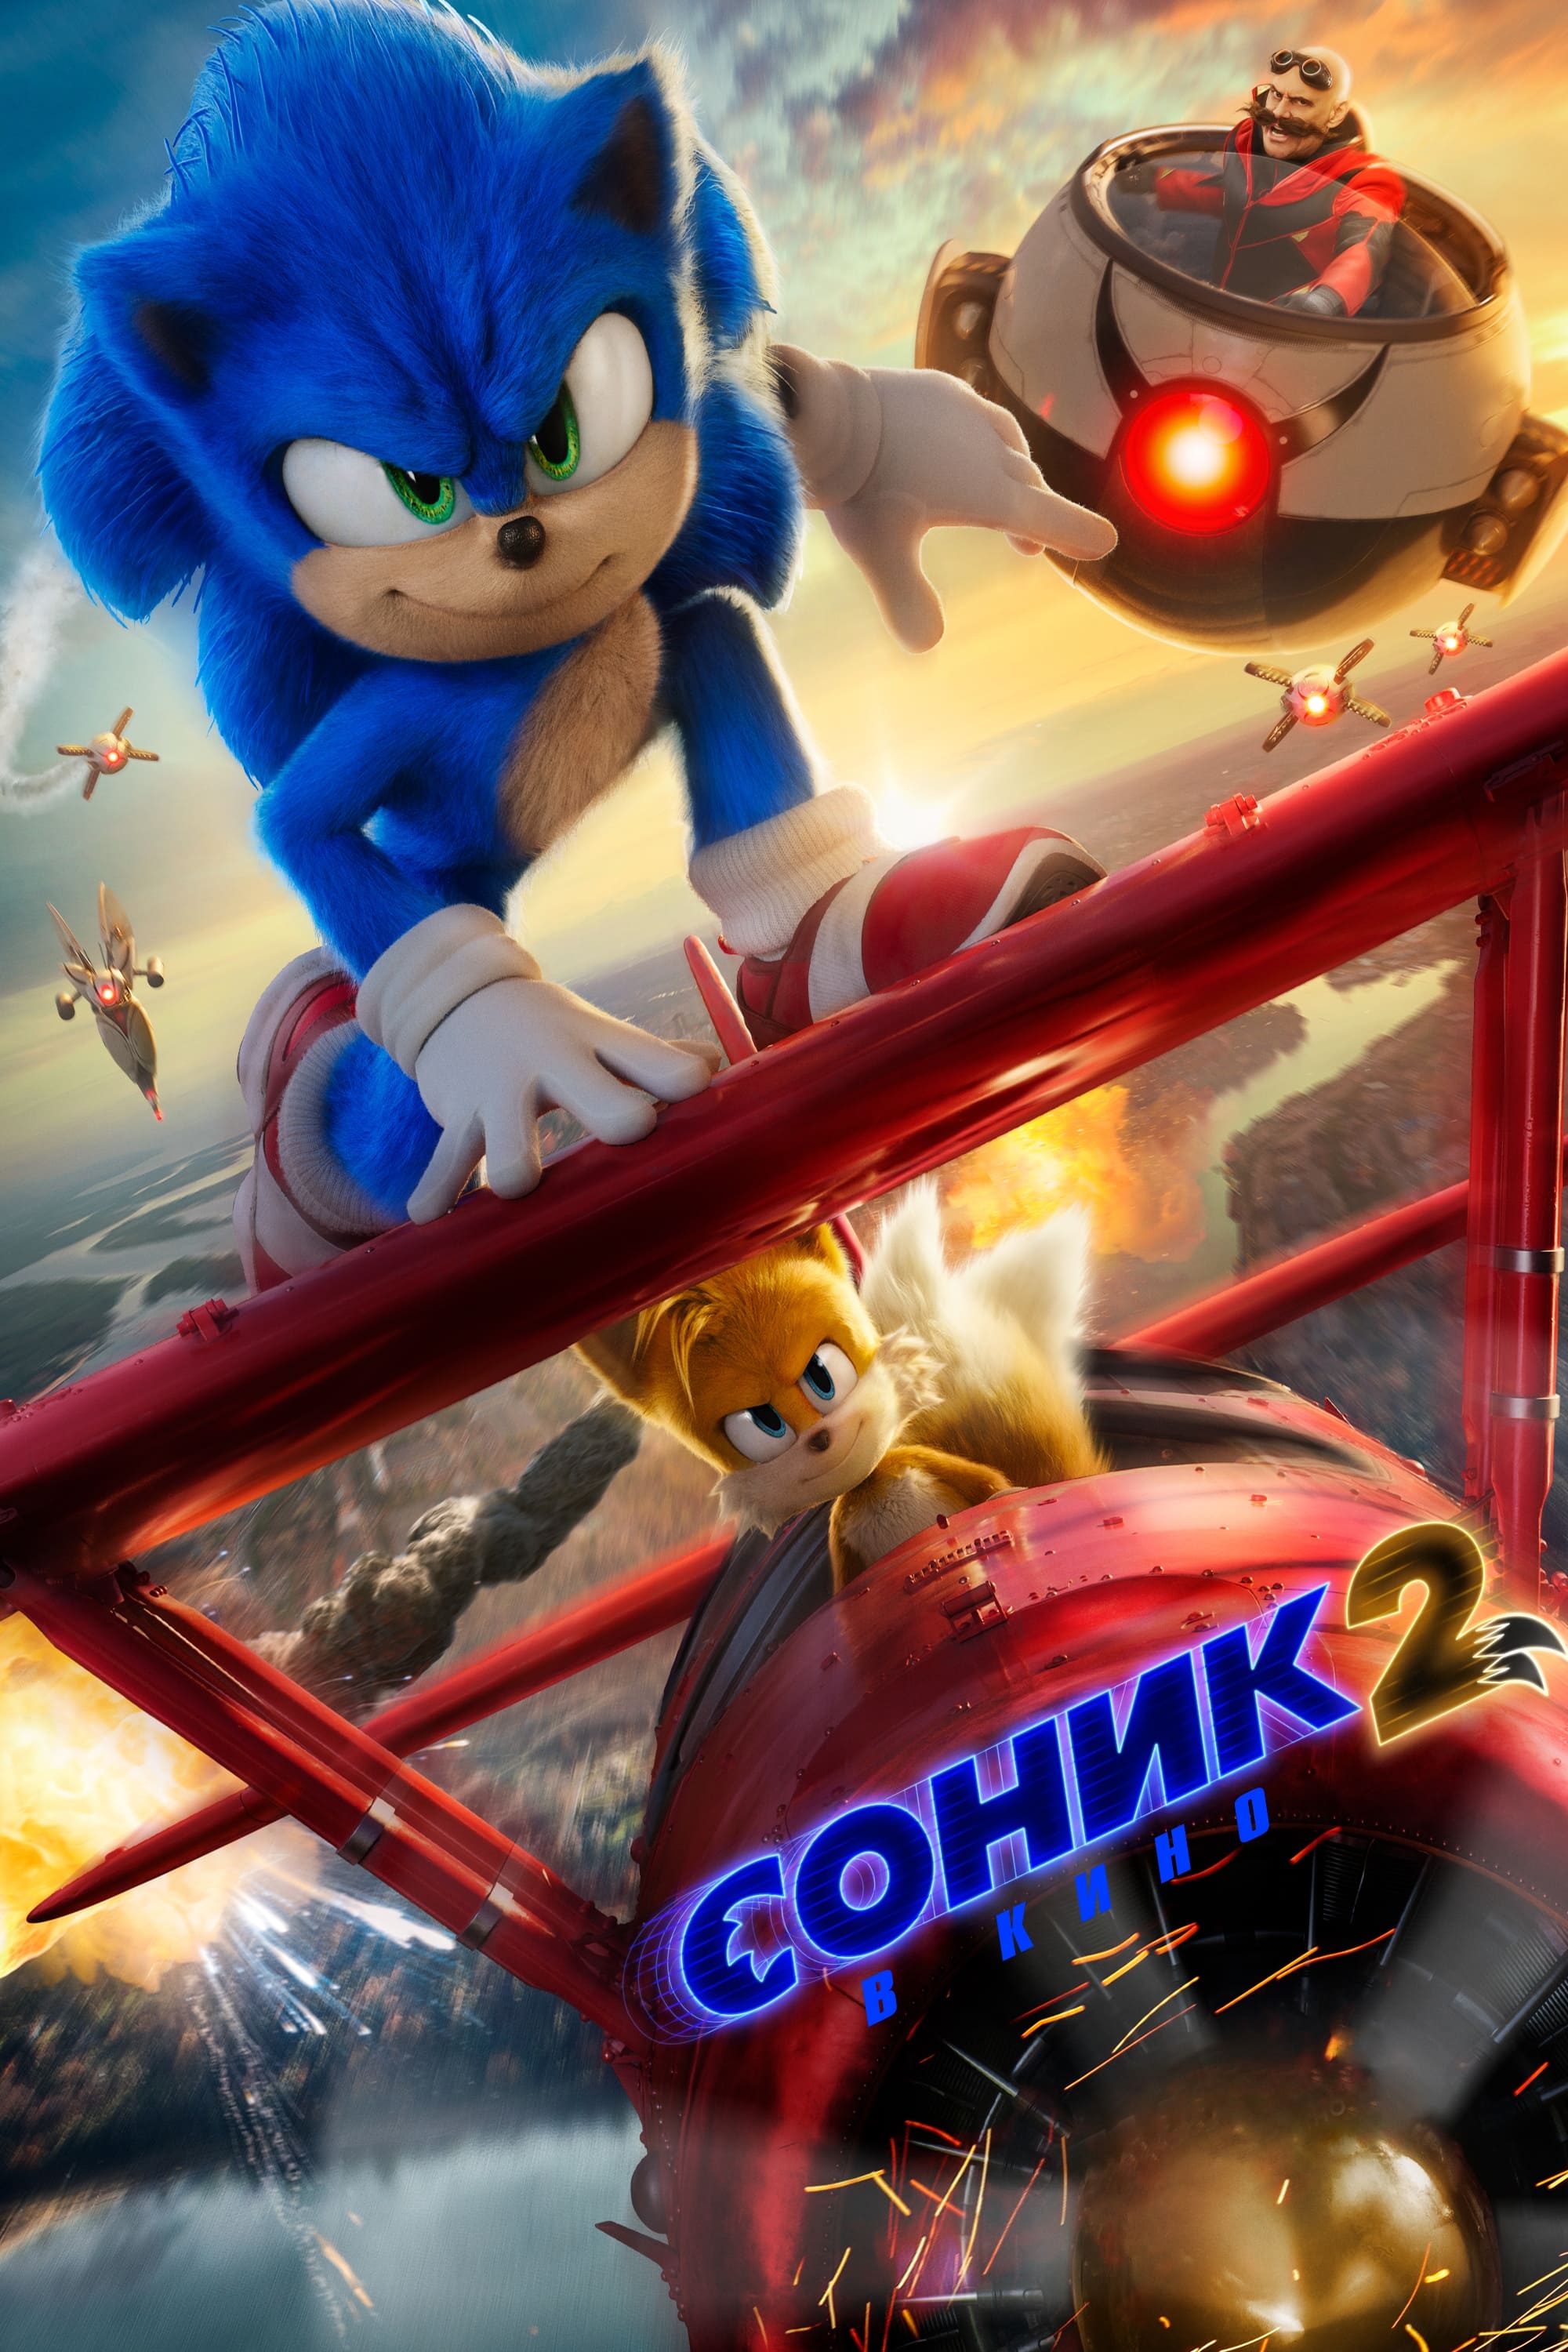  2   / Sonic the Hedgehog 2 (2022) WEB-DL 1080p | HDRezka Studio, TVShows, Jasker, ALEKS KV